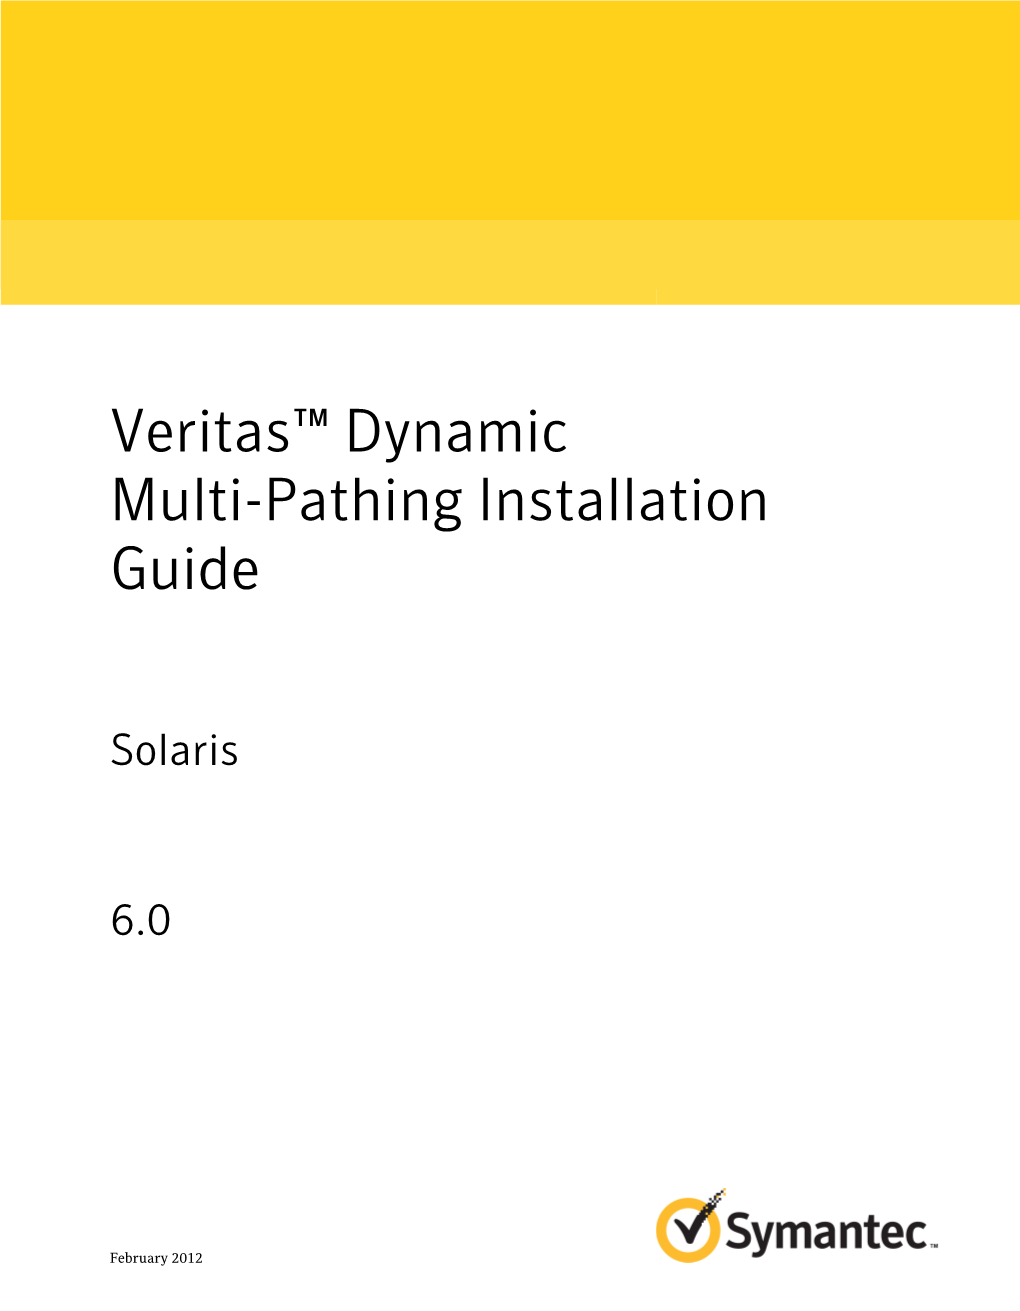 Veritas™ Dynamic Multi-Pathing Installation Guide: Solaris